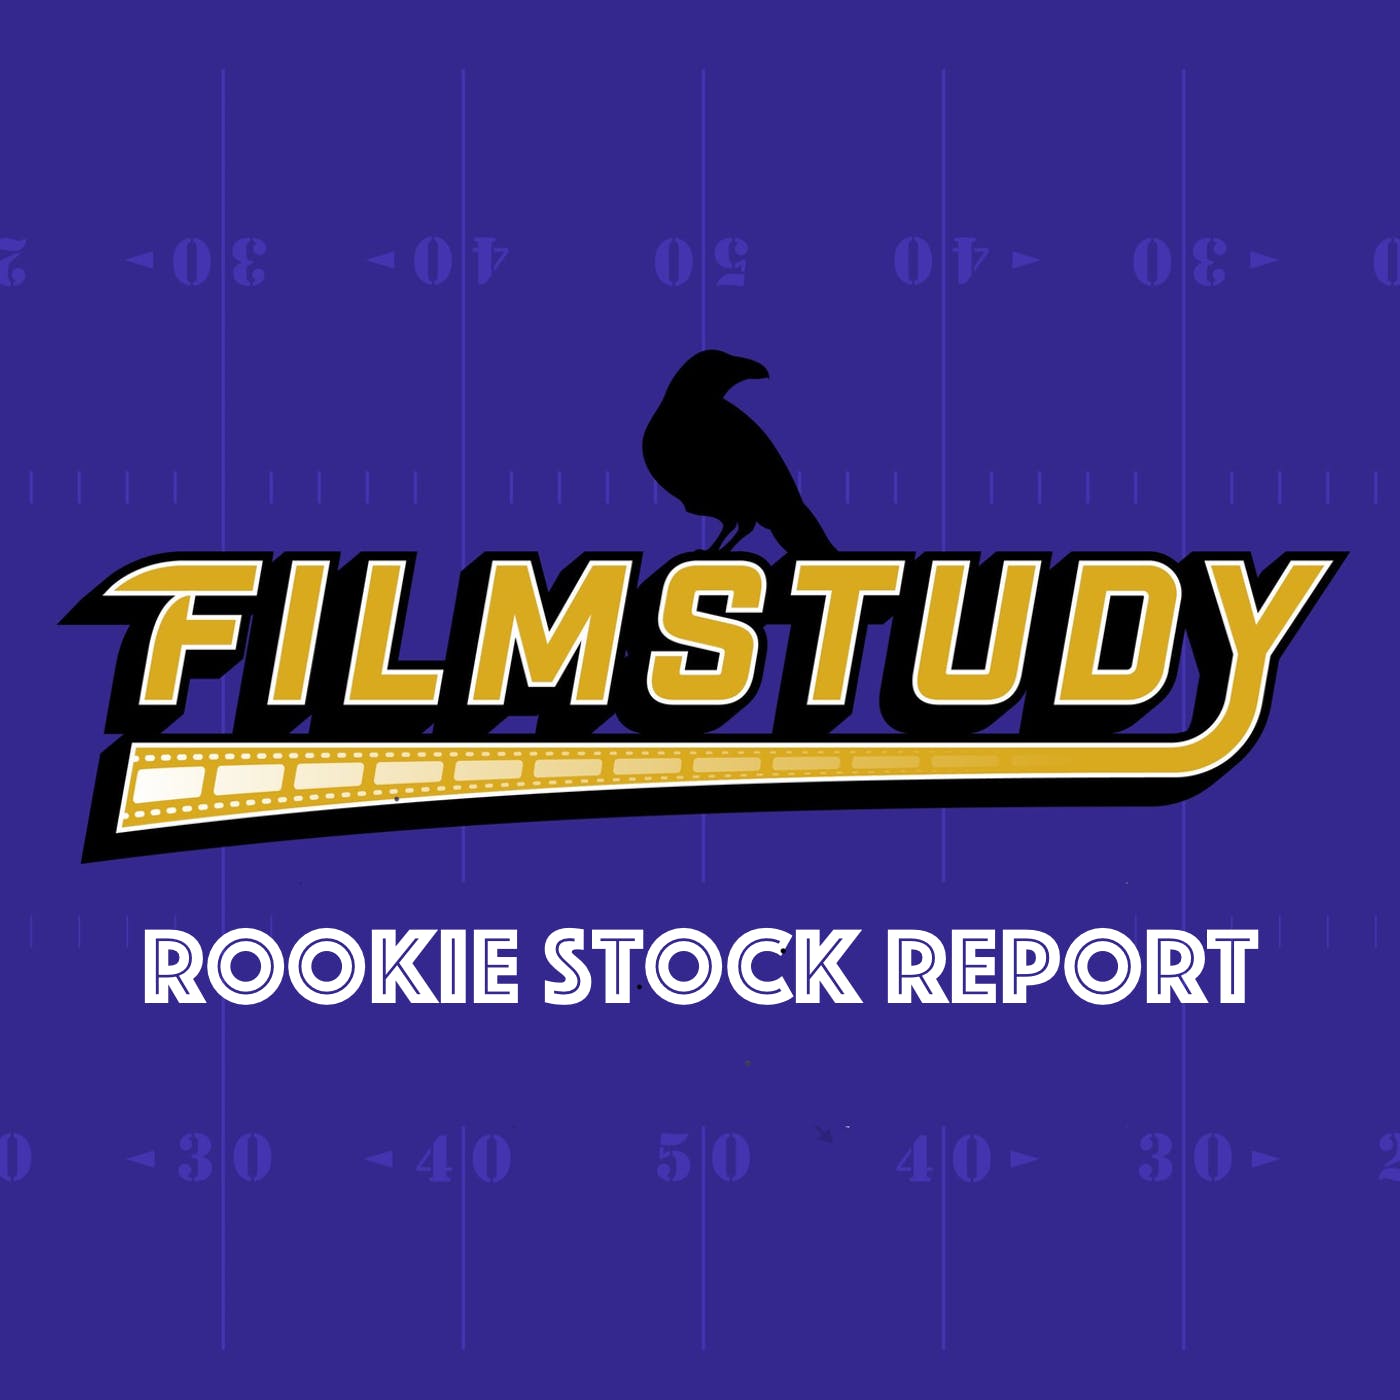 Rookie Stock Report